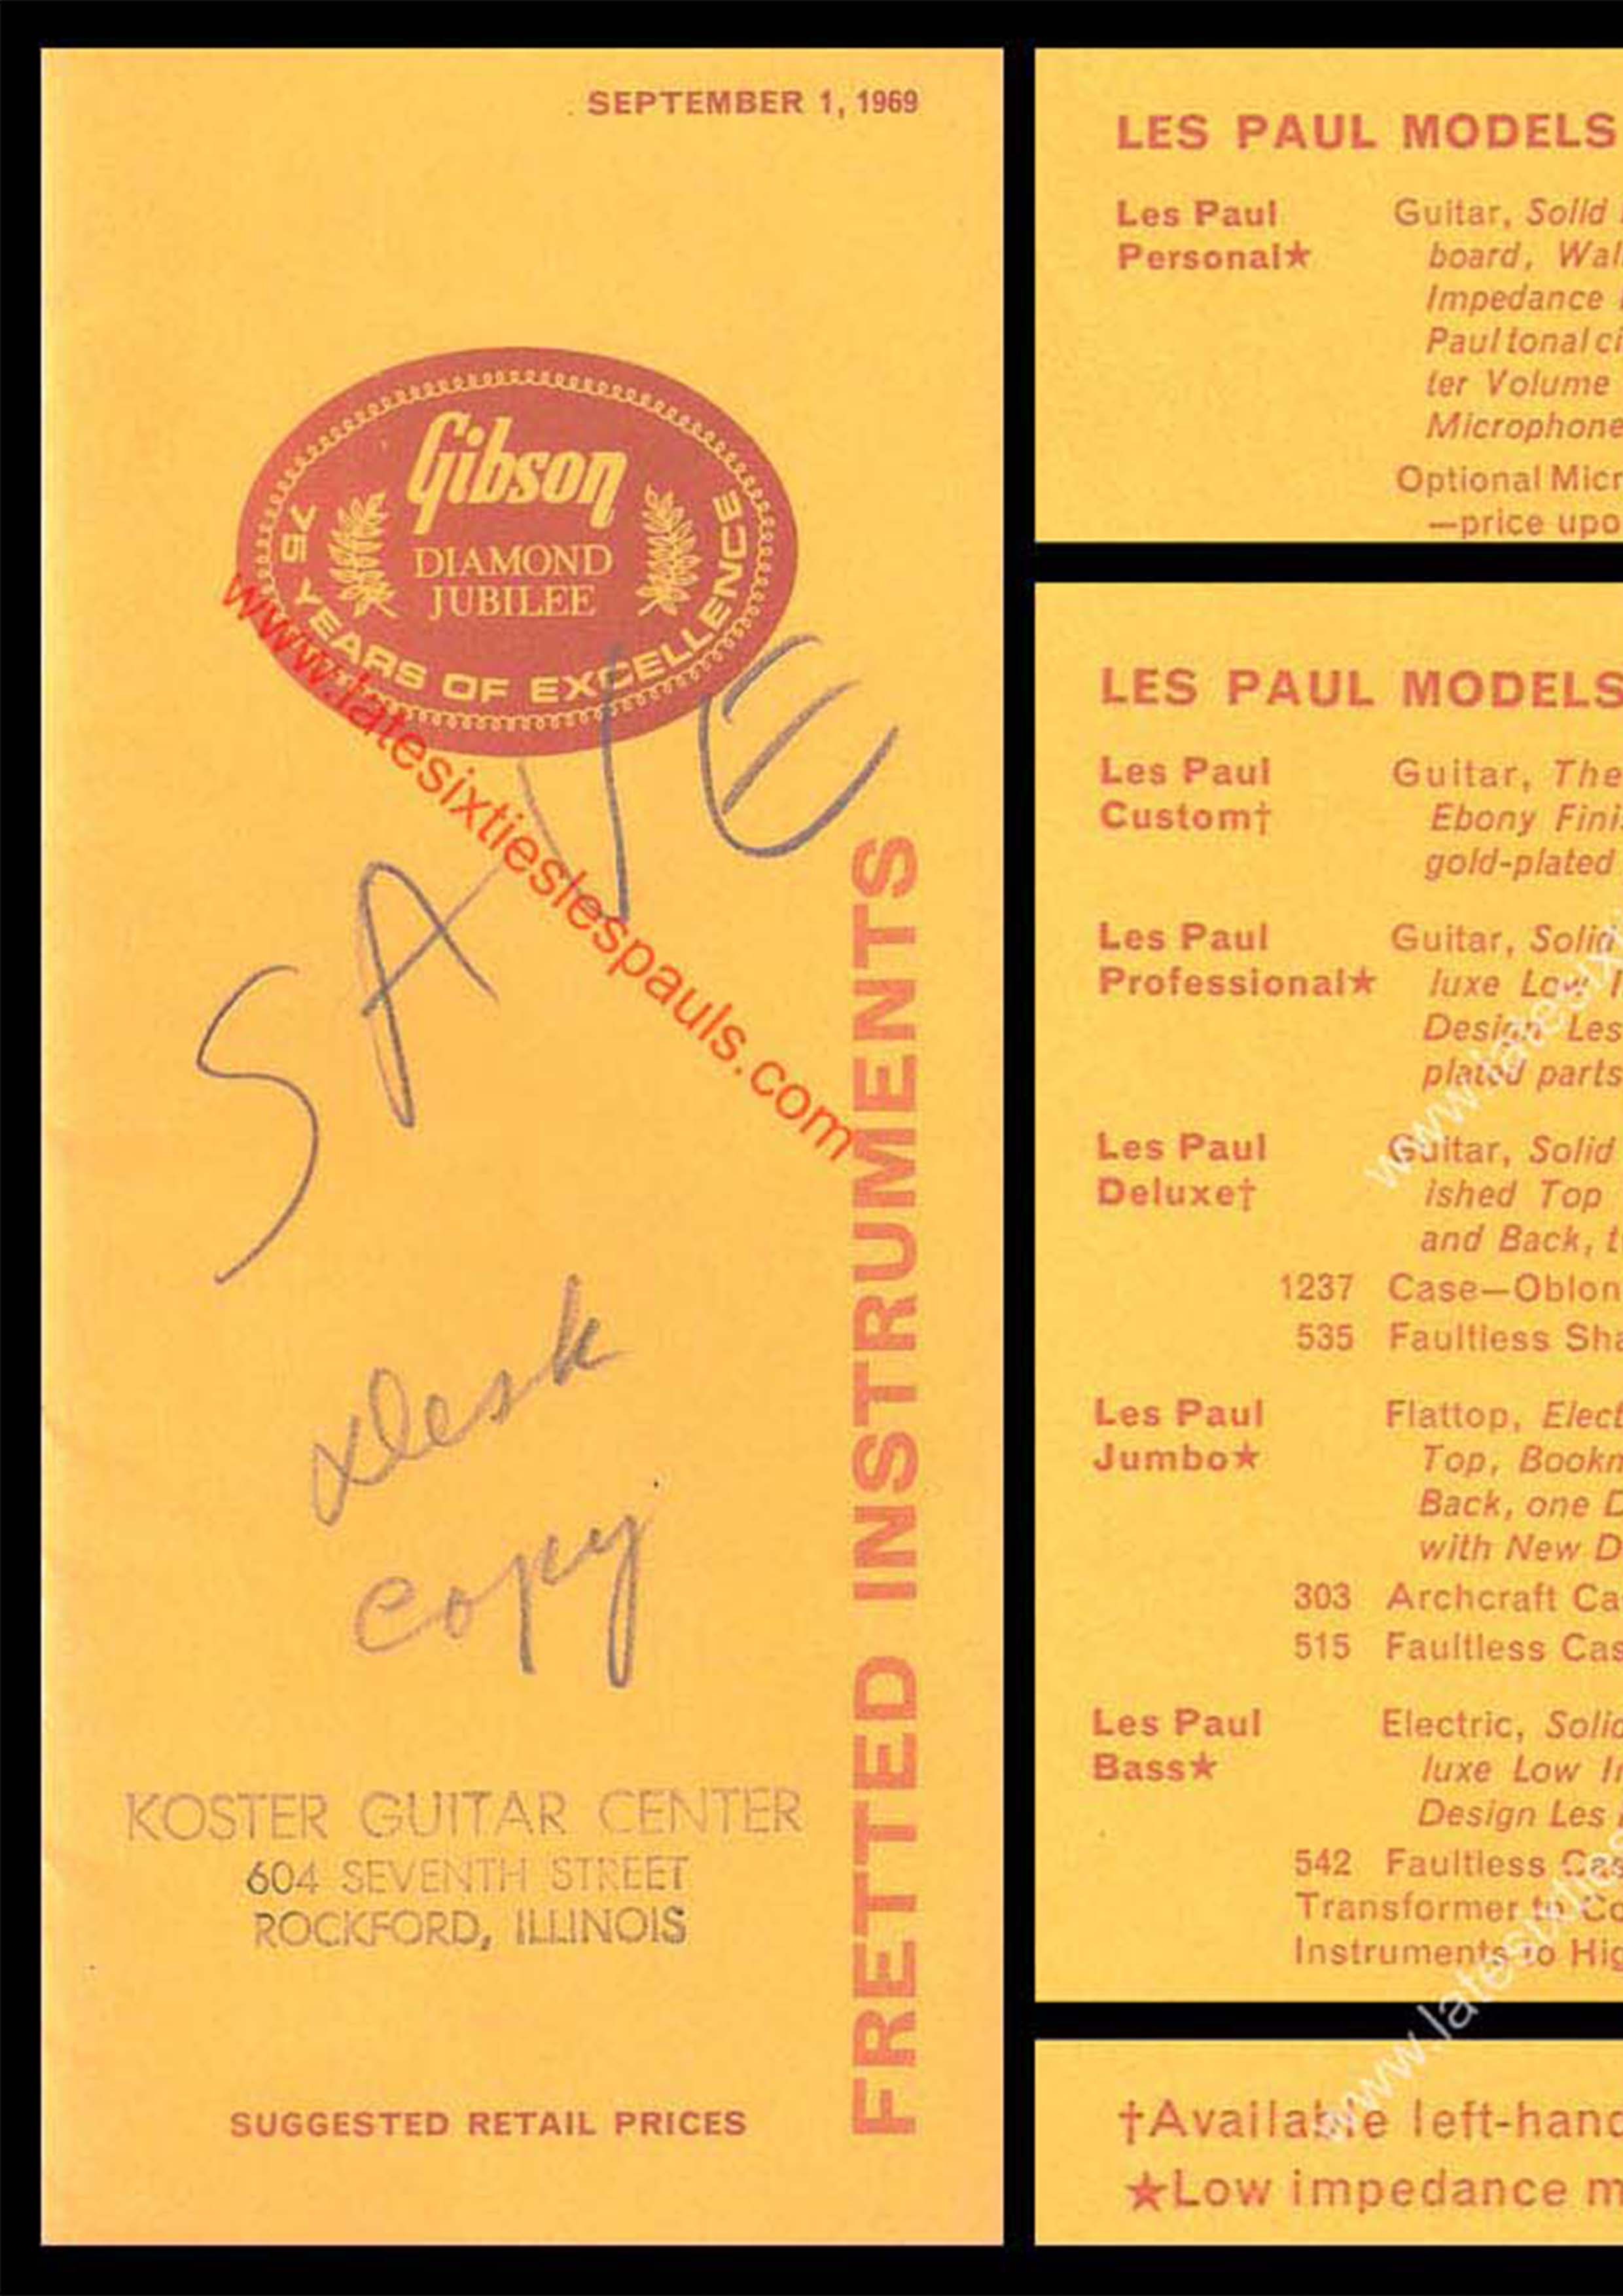 Gibson Price List 1969